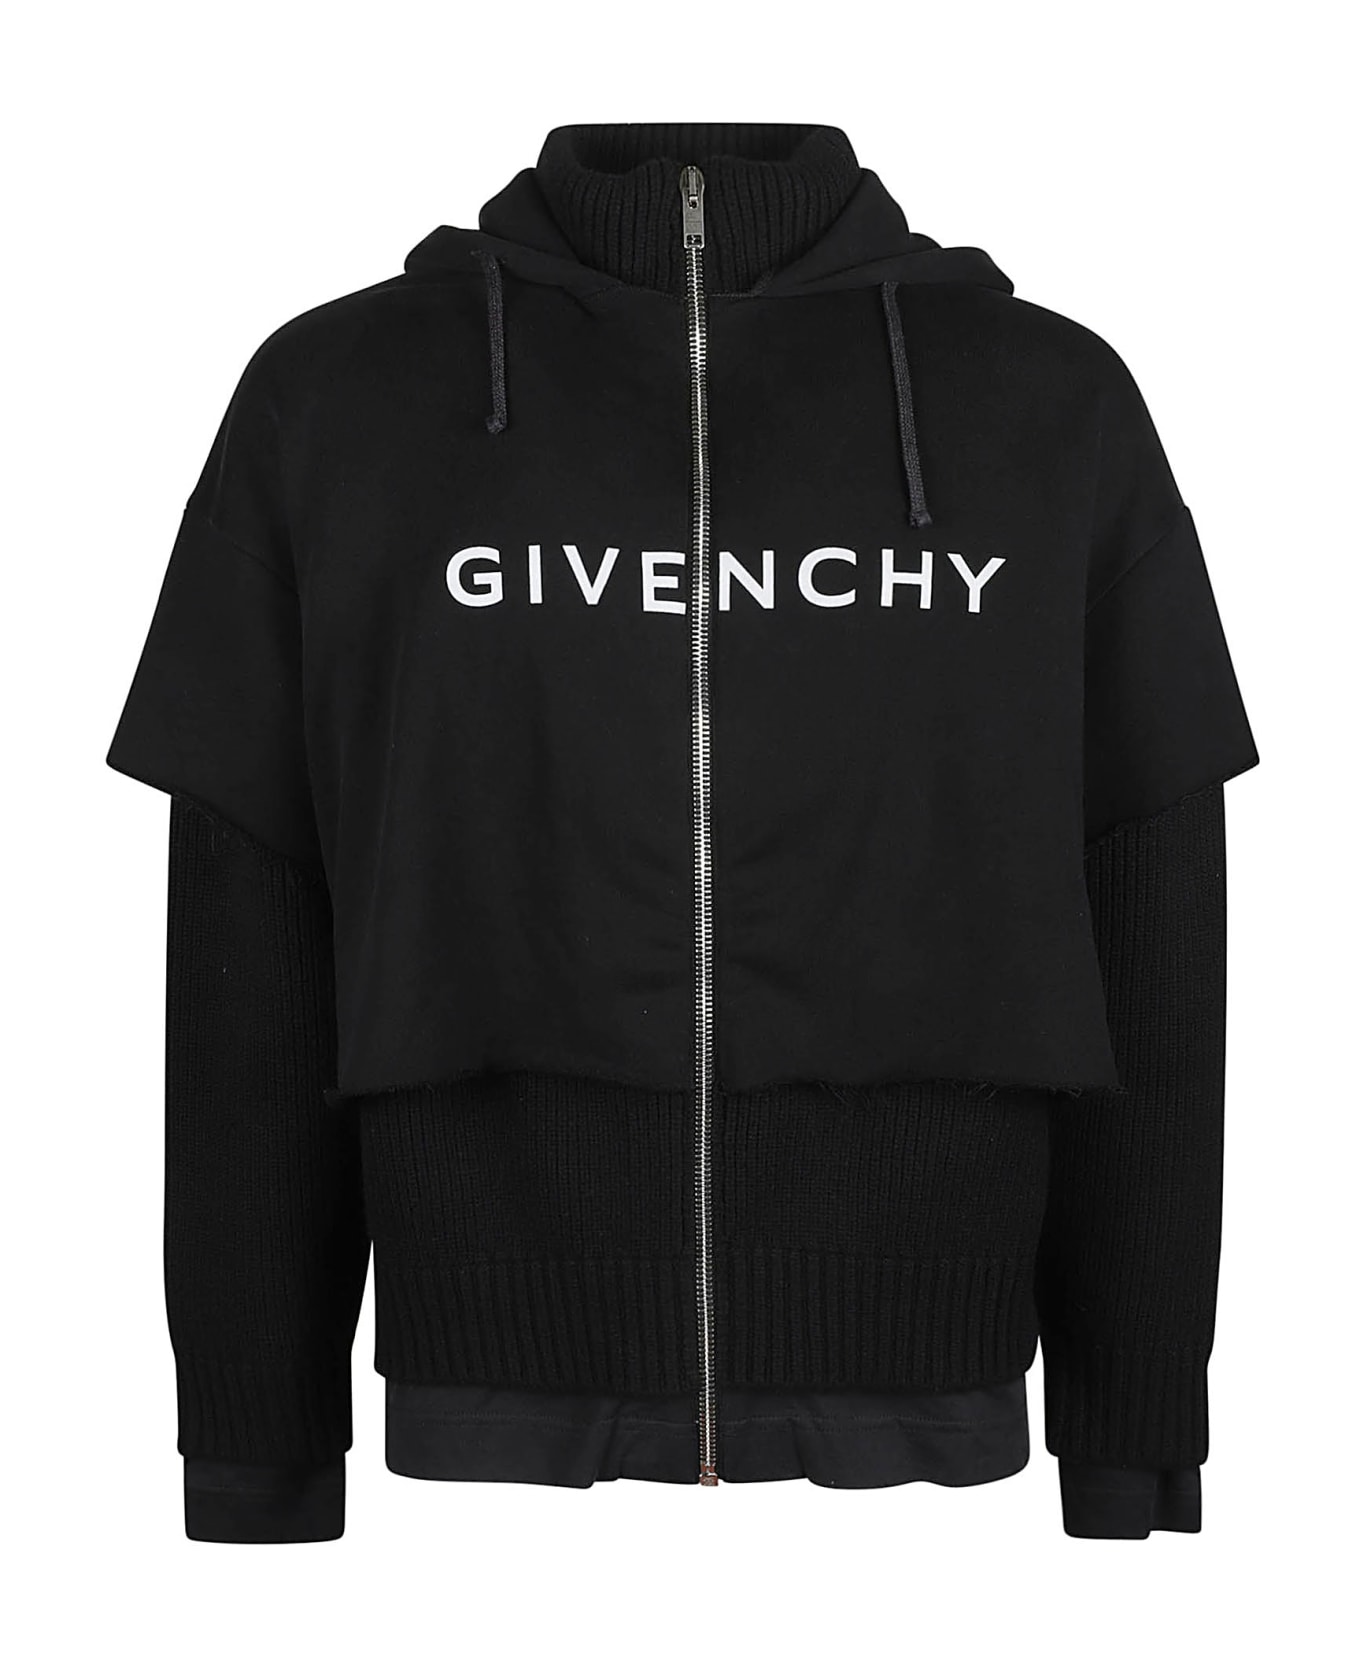 Givenchy Zipped Hoodie Sweatshirt - Black